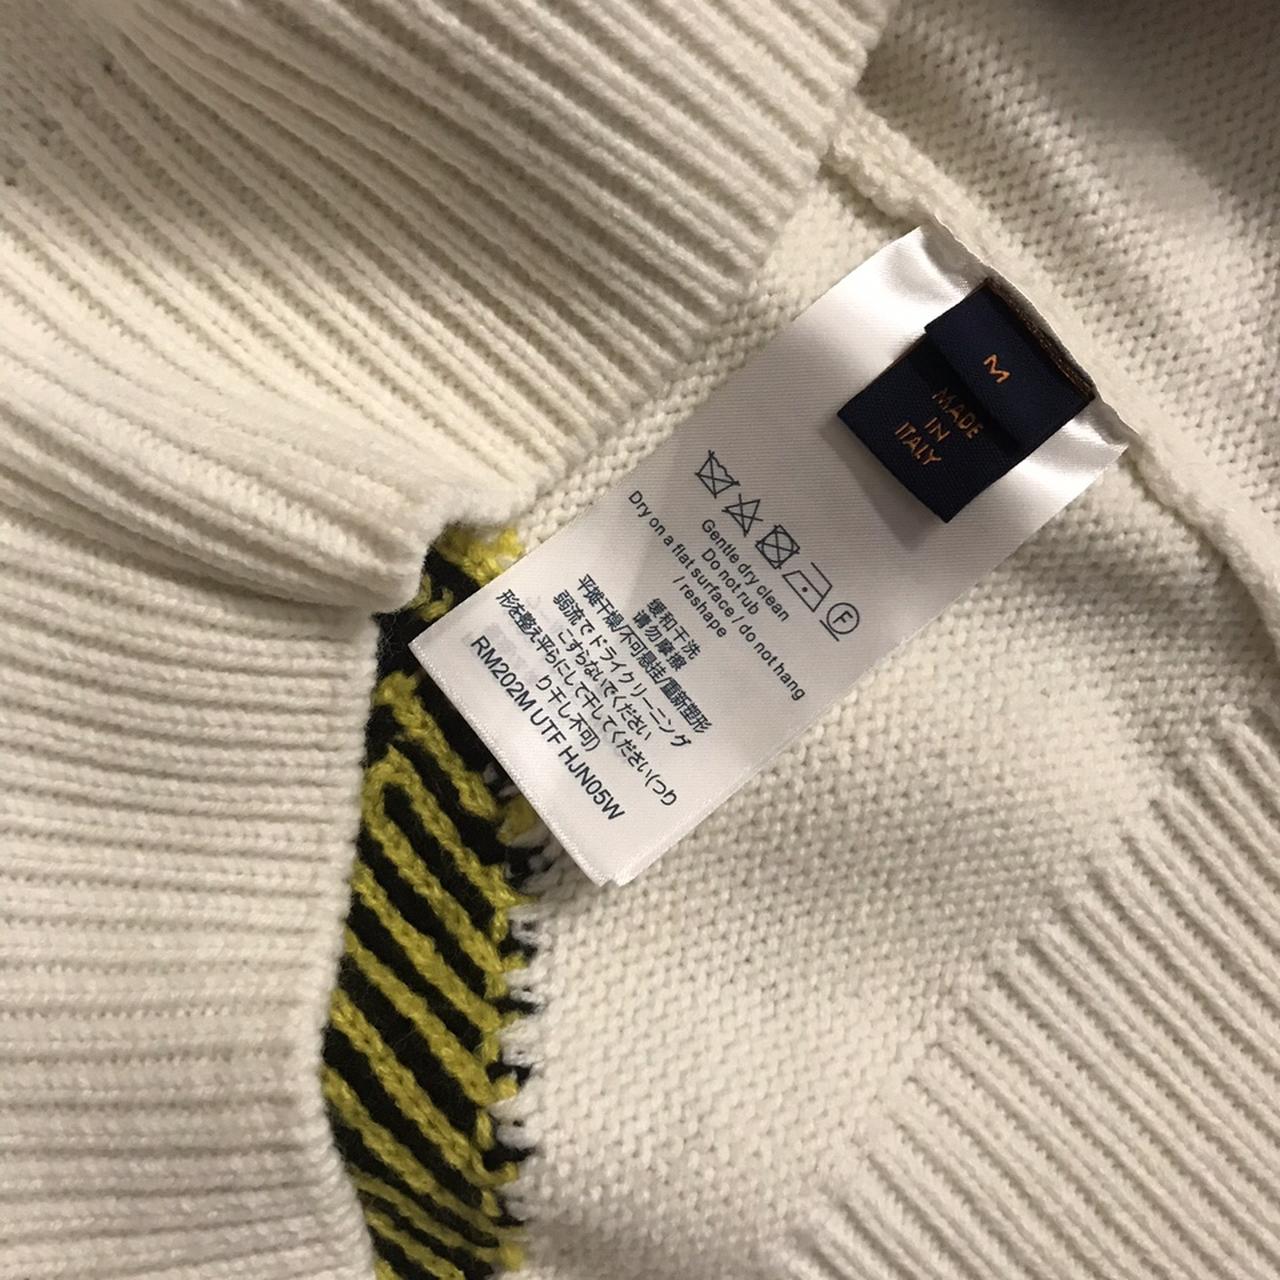 Handmade Louis Vuitton embroidered sweatshirt Got - Depop